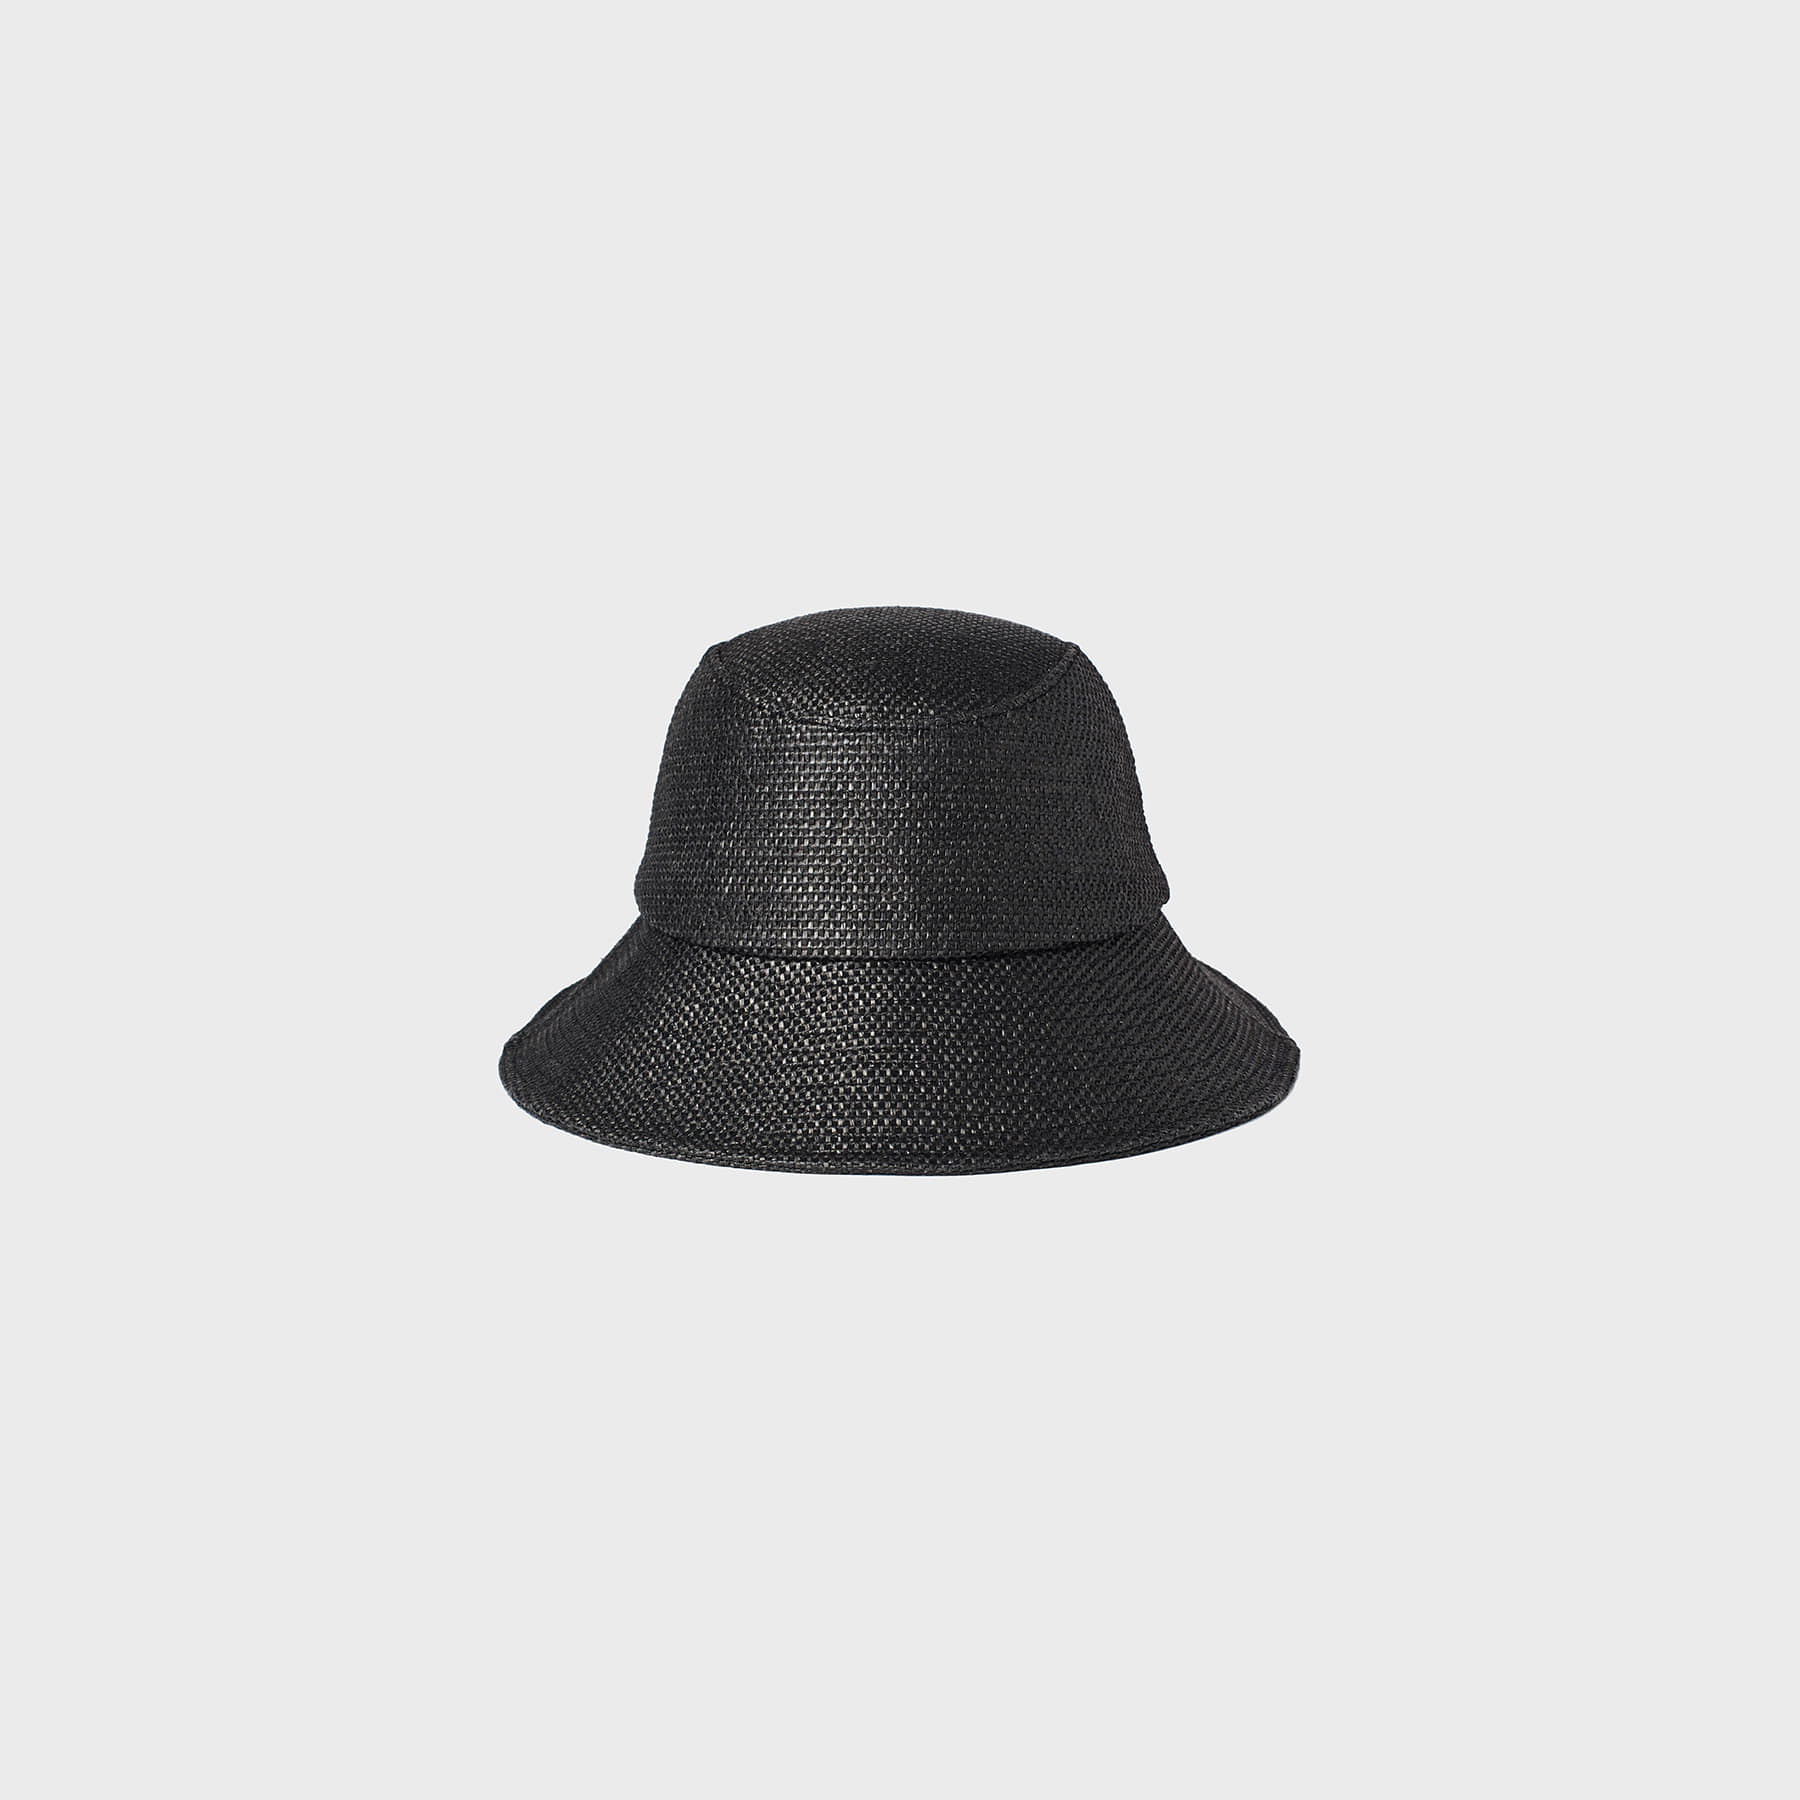 Jute hat (black)